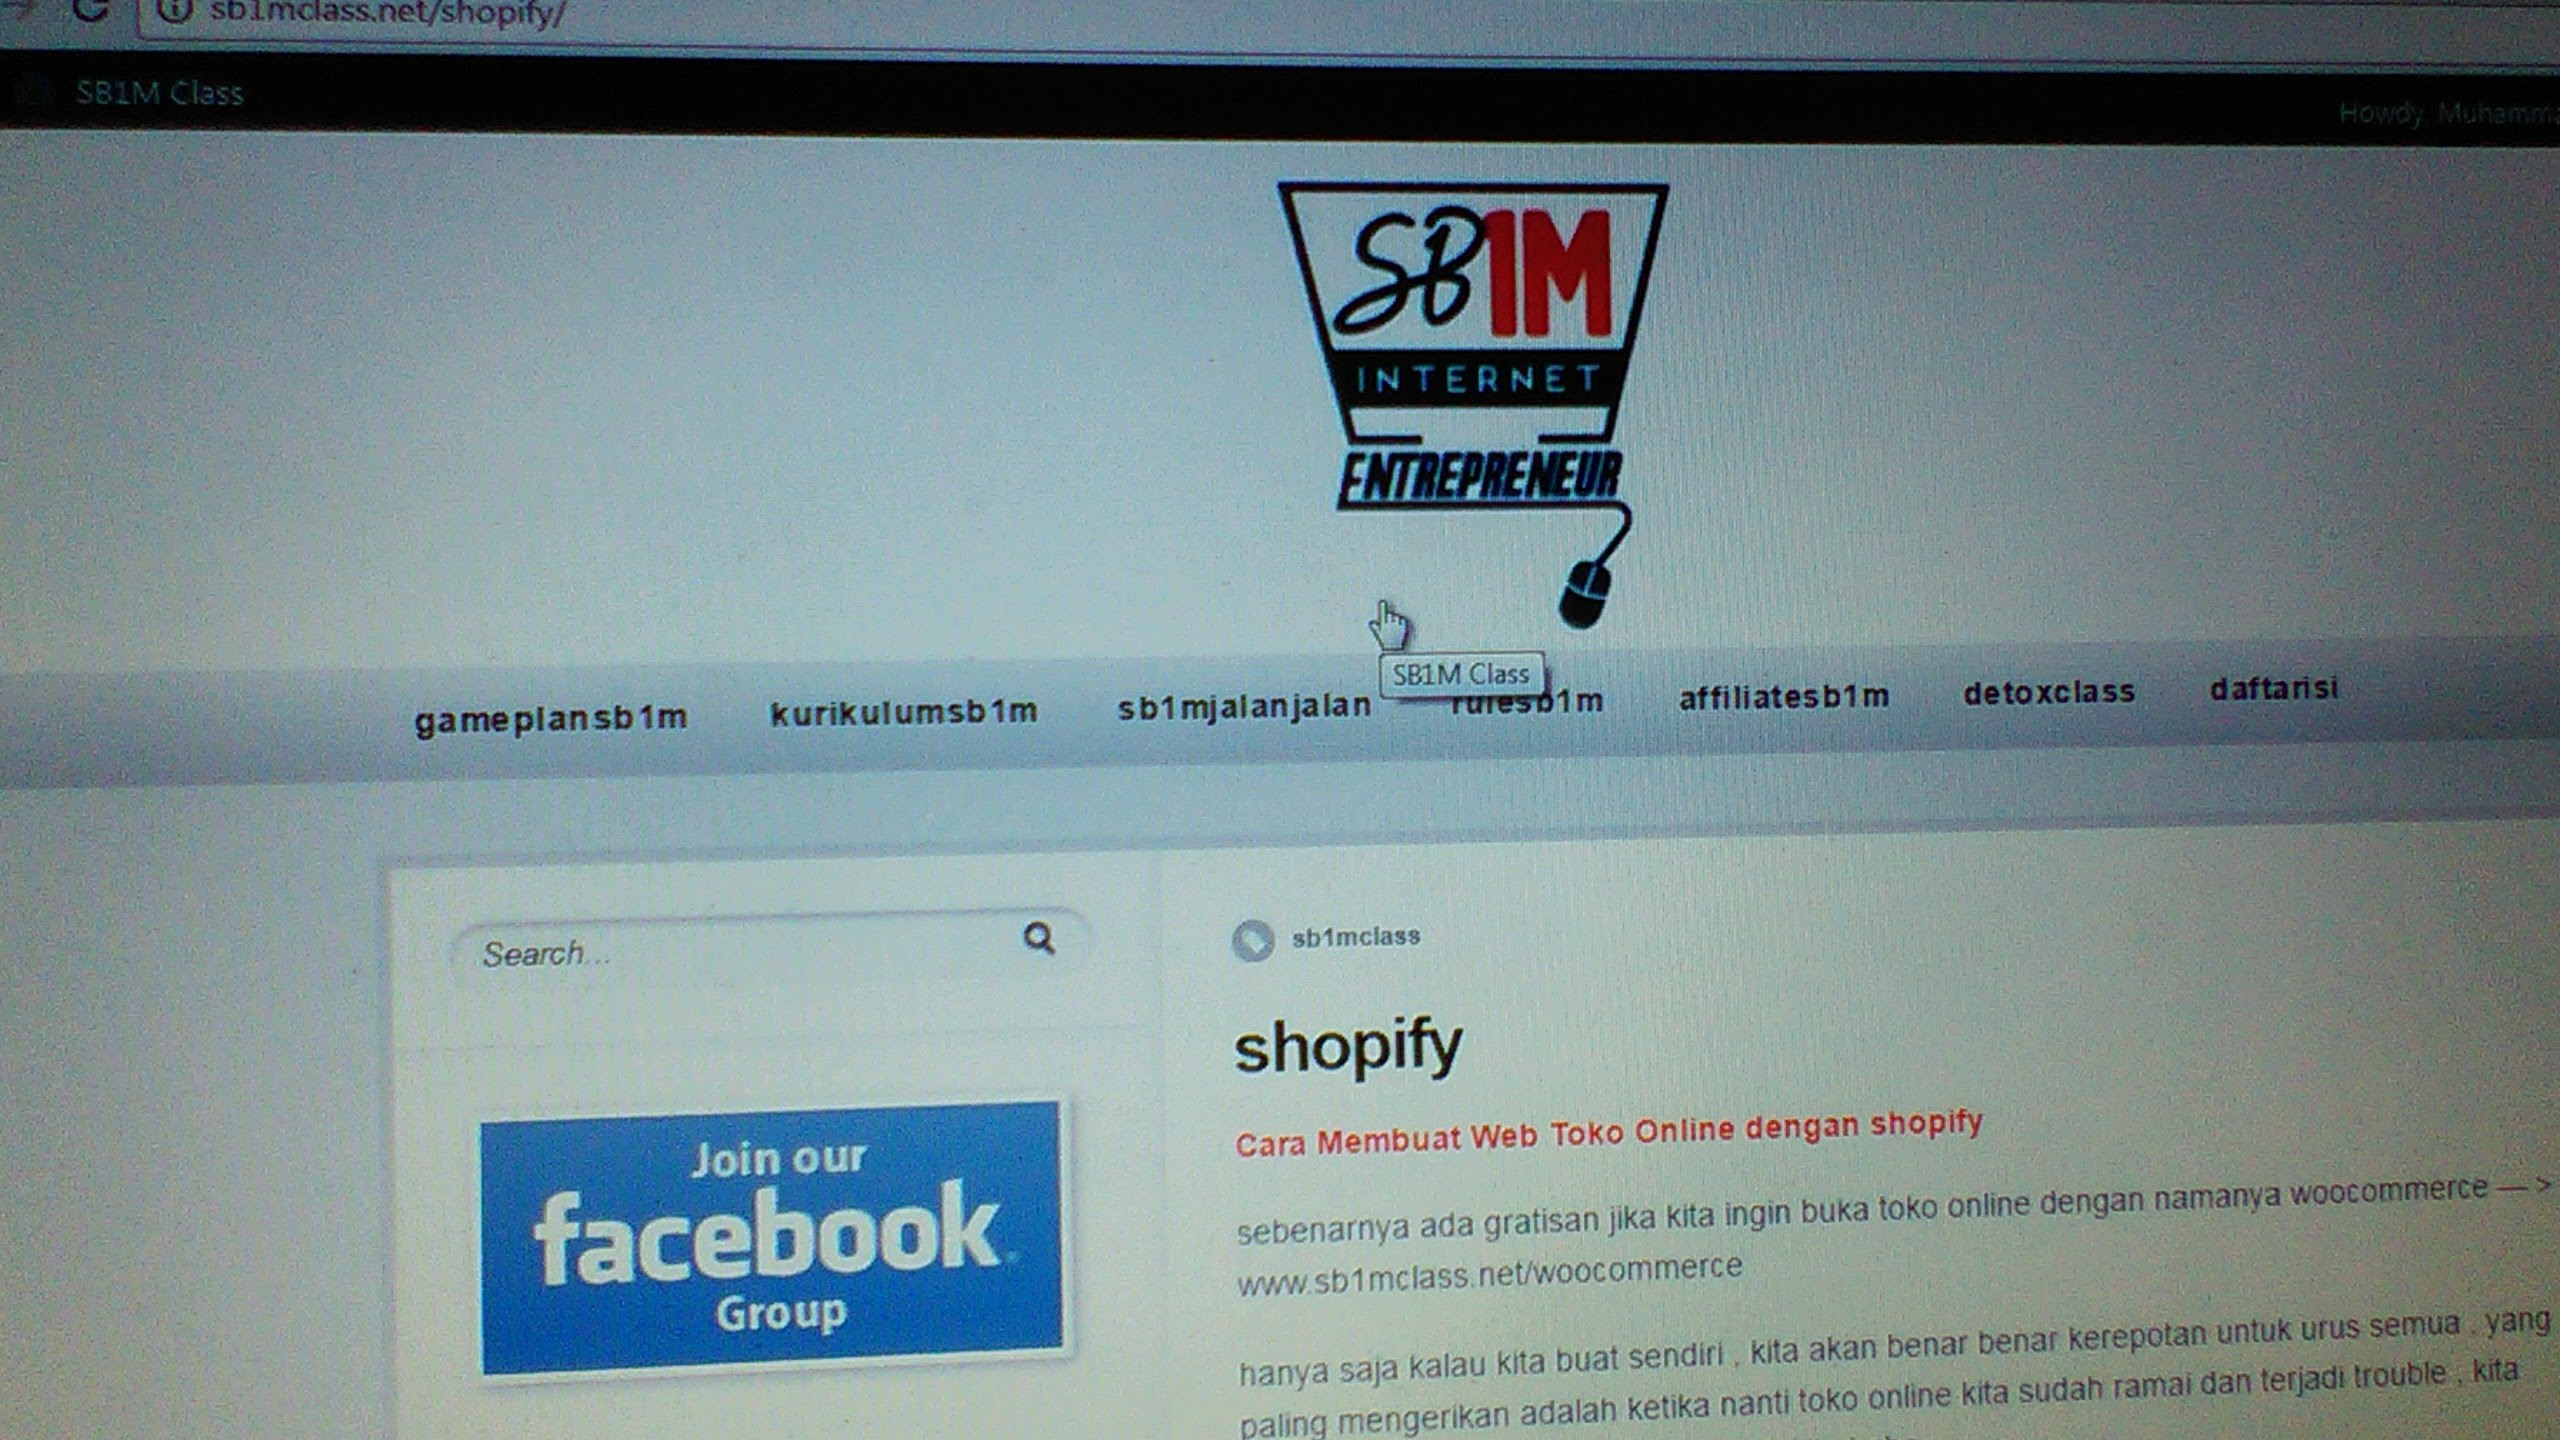 materi-kursus-internet-marketing-sb1m-shopify